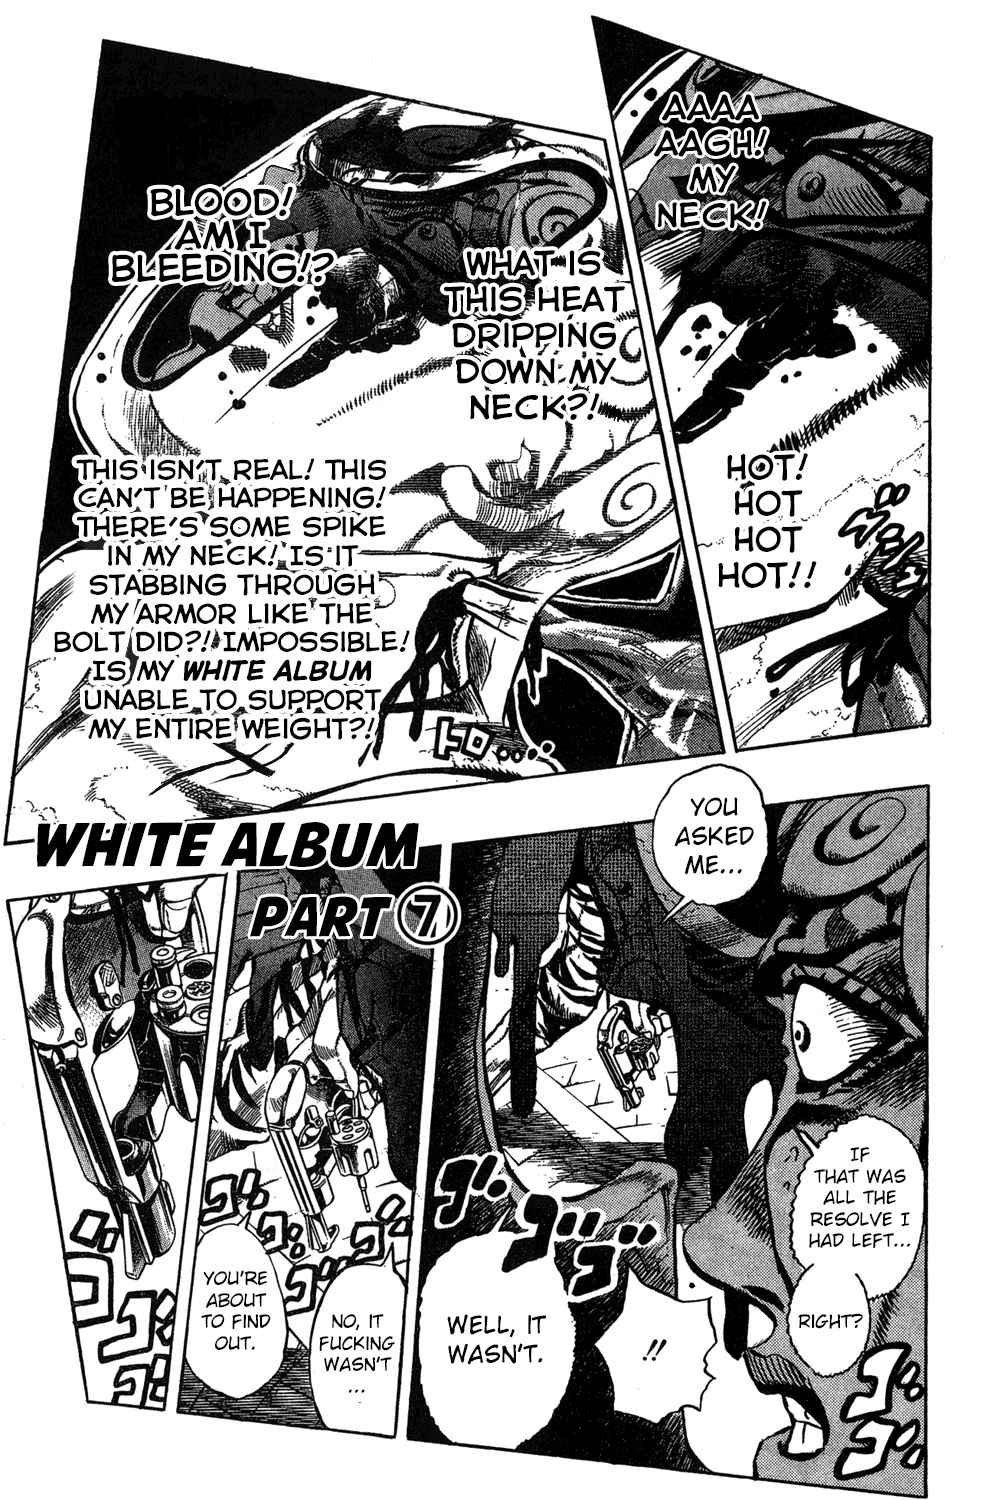 JoJo's Bizarre Adventure Part 5 Vento Aureo Vol. 9 Ch. 76 White Album Part 7